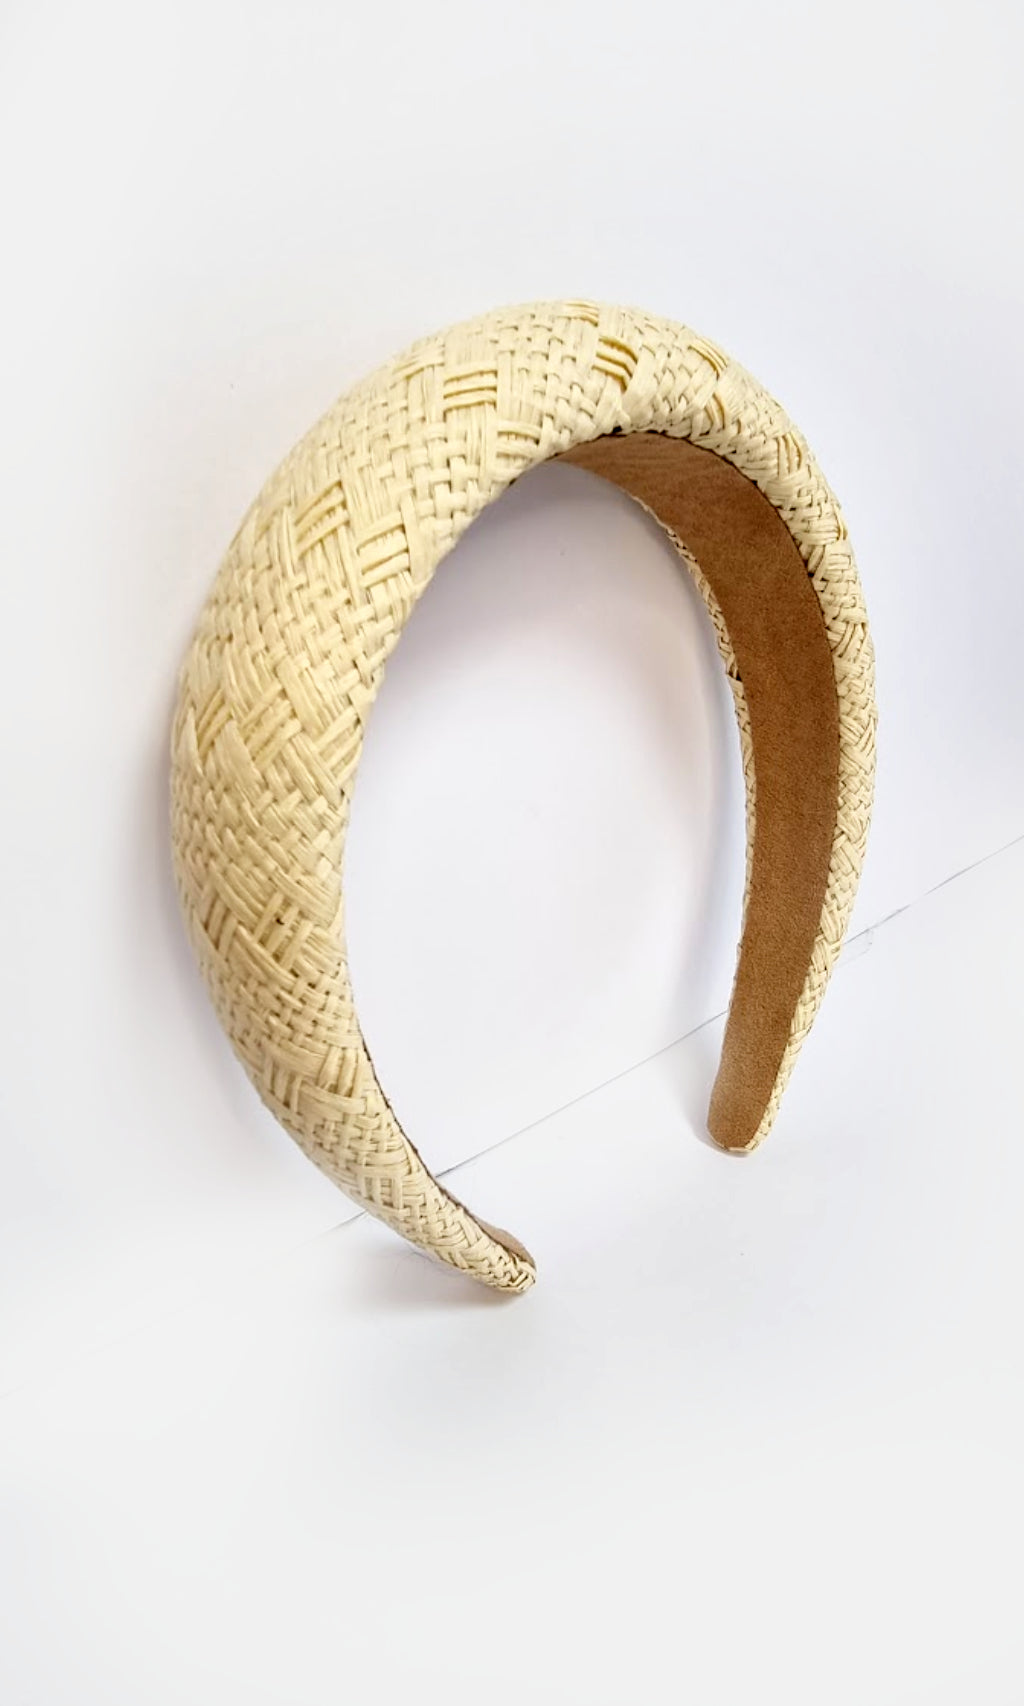 Celine Martine Camille Headband in light straw